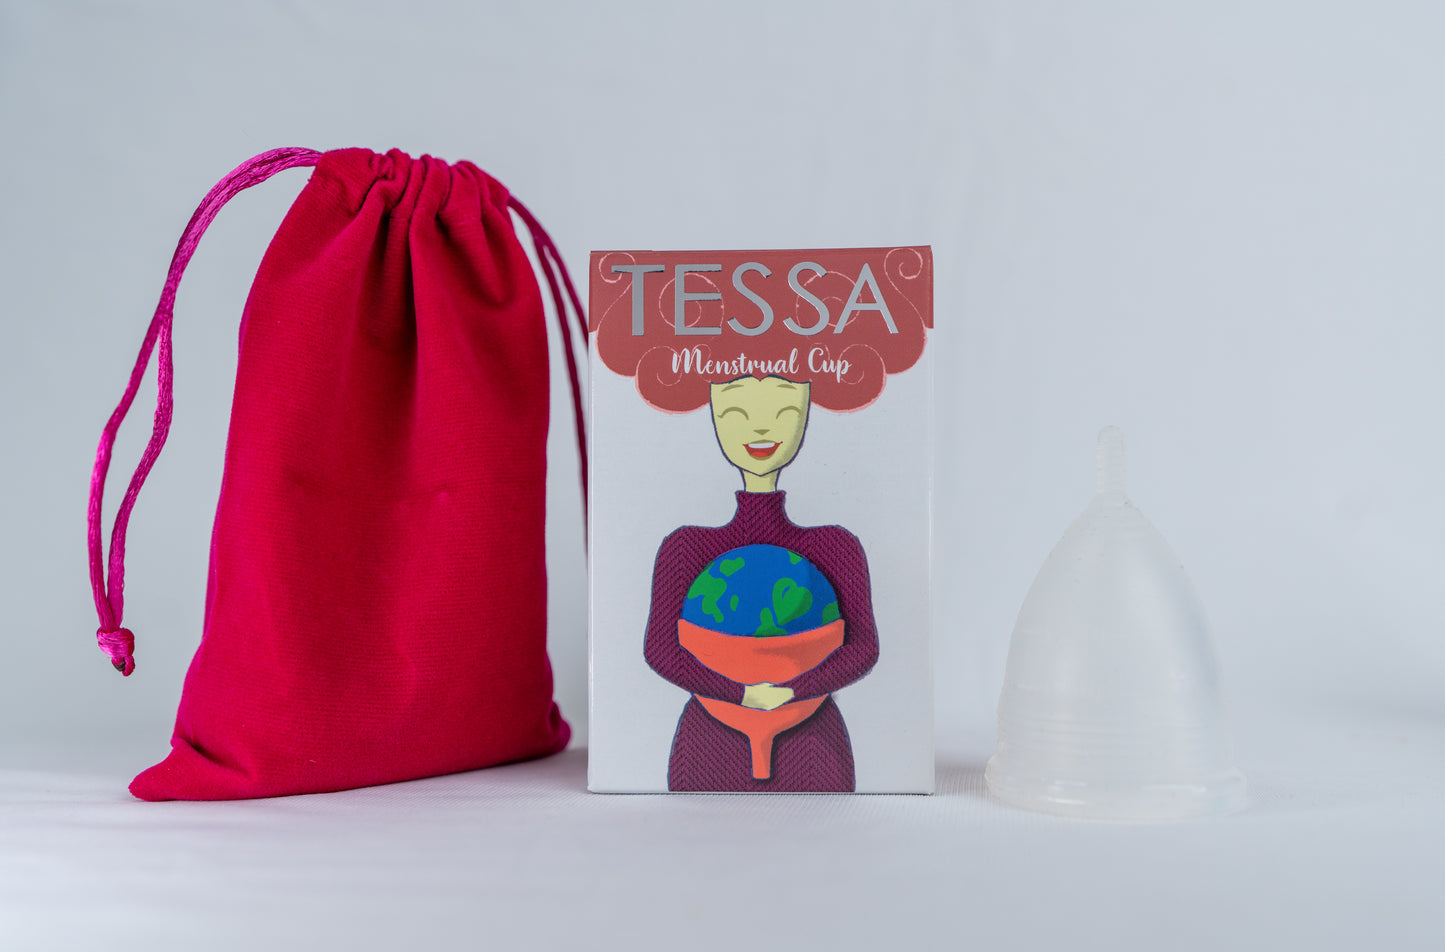 Tessa Menstrual Cup - Small